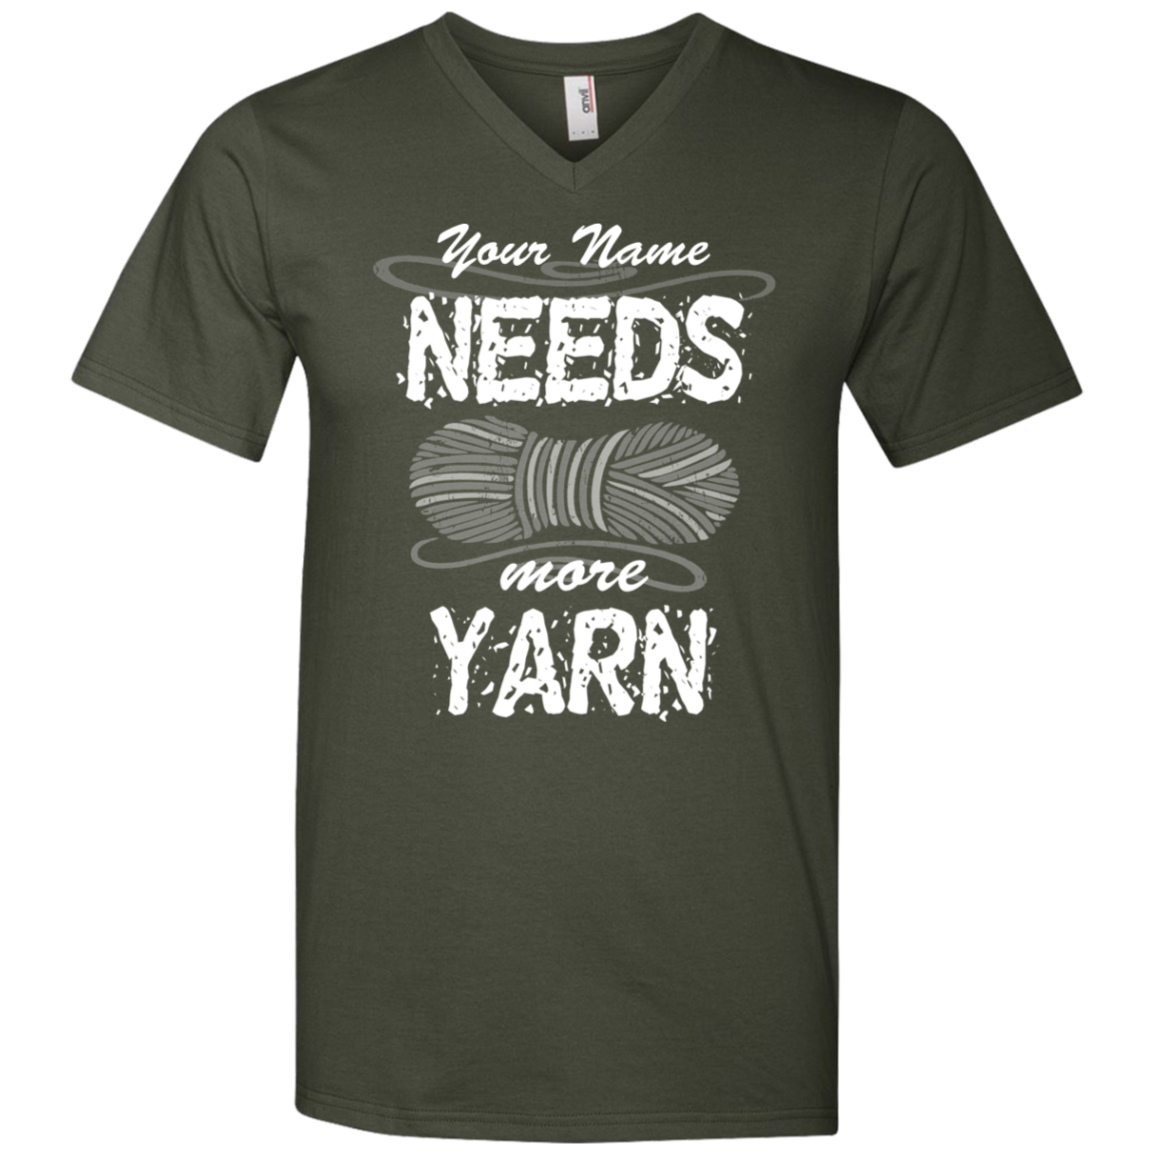 Needs More Yarn - Personalized Unisex T-Shirts